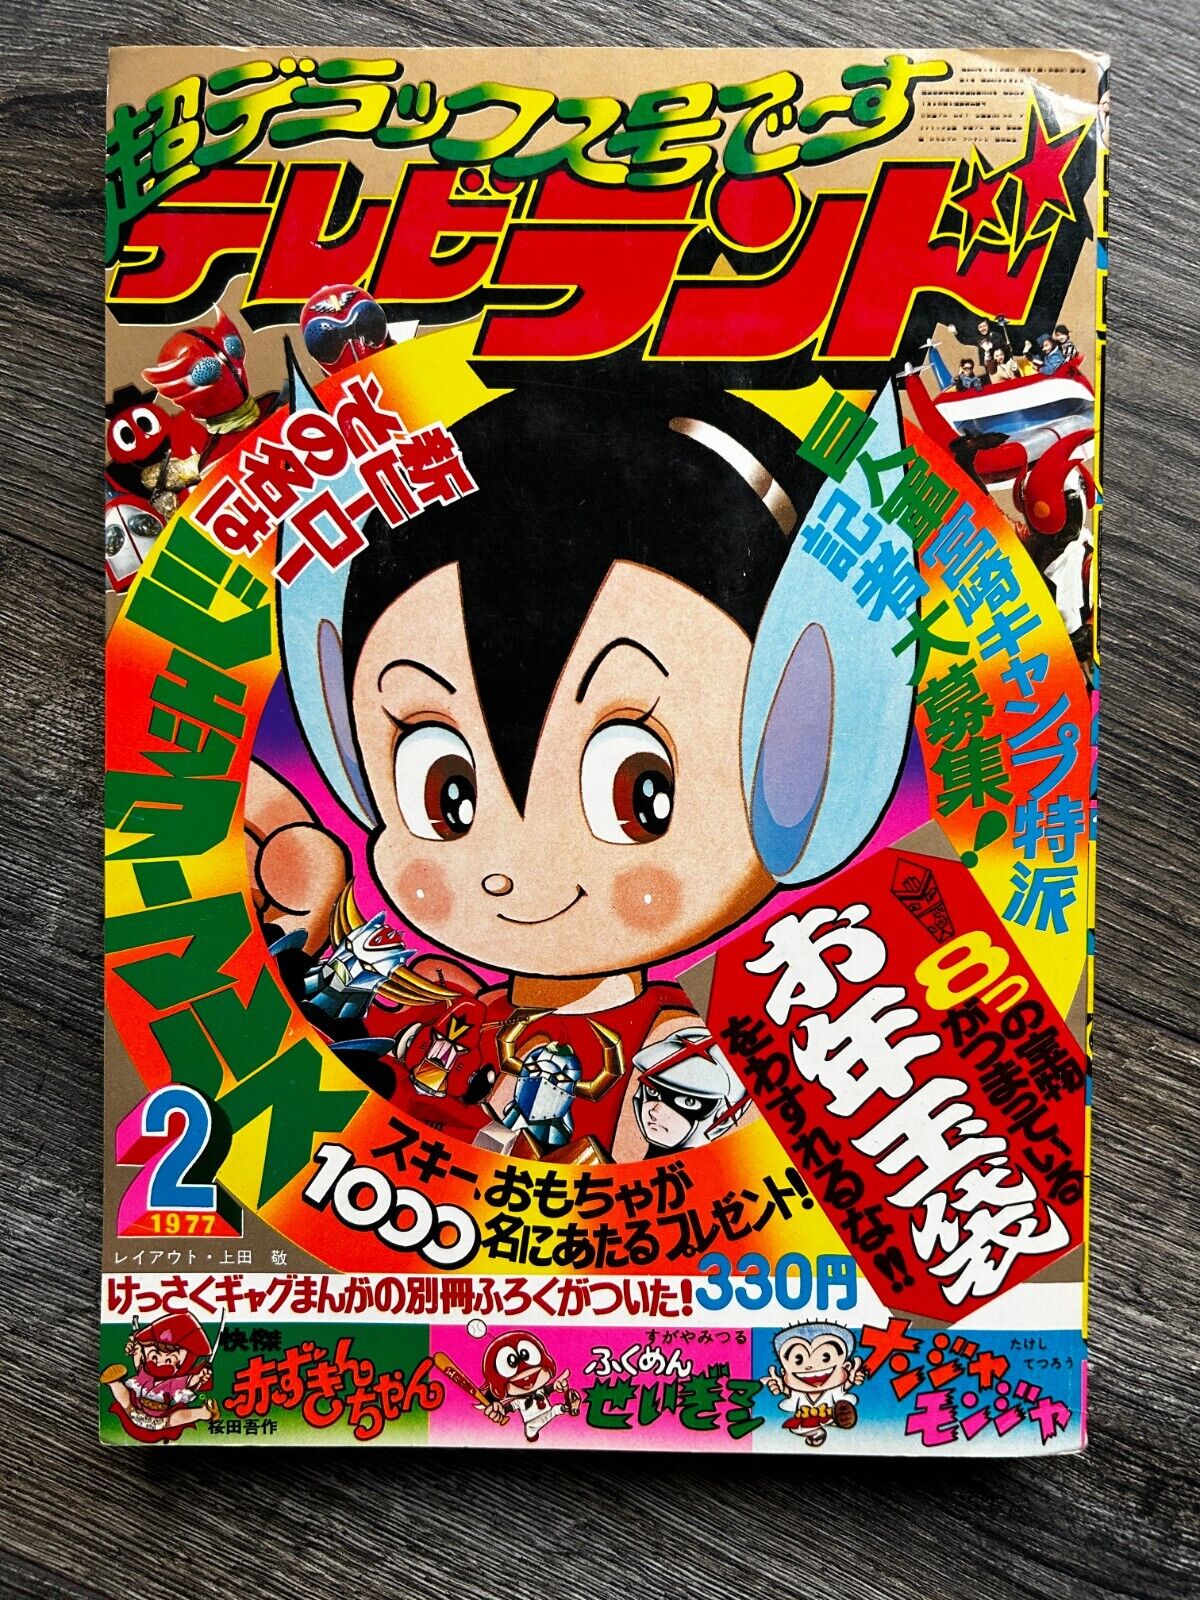 Super Sentai TV Land Magazine Feb 1977 All Inserts Anime Manga Tokusatsu Japan